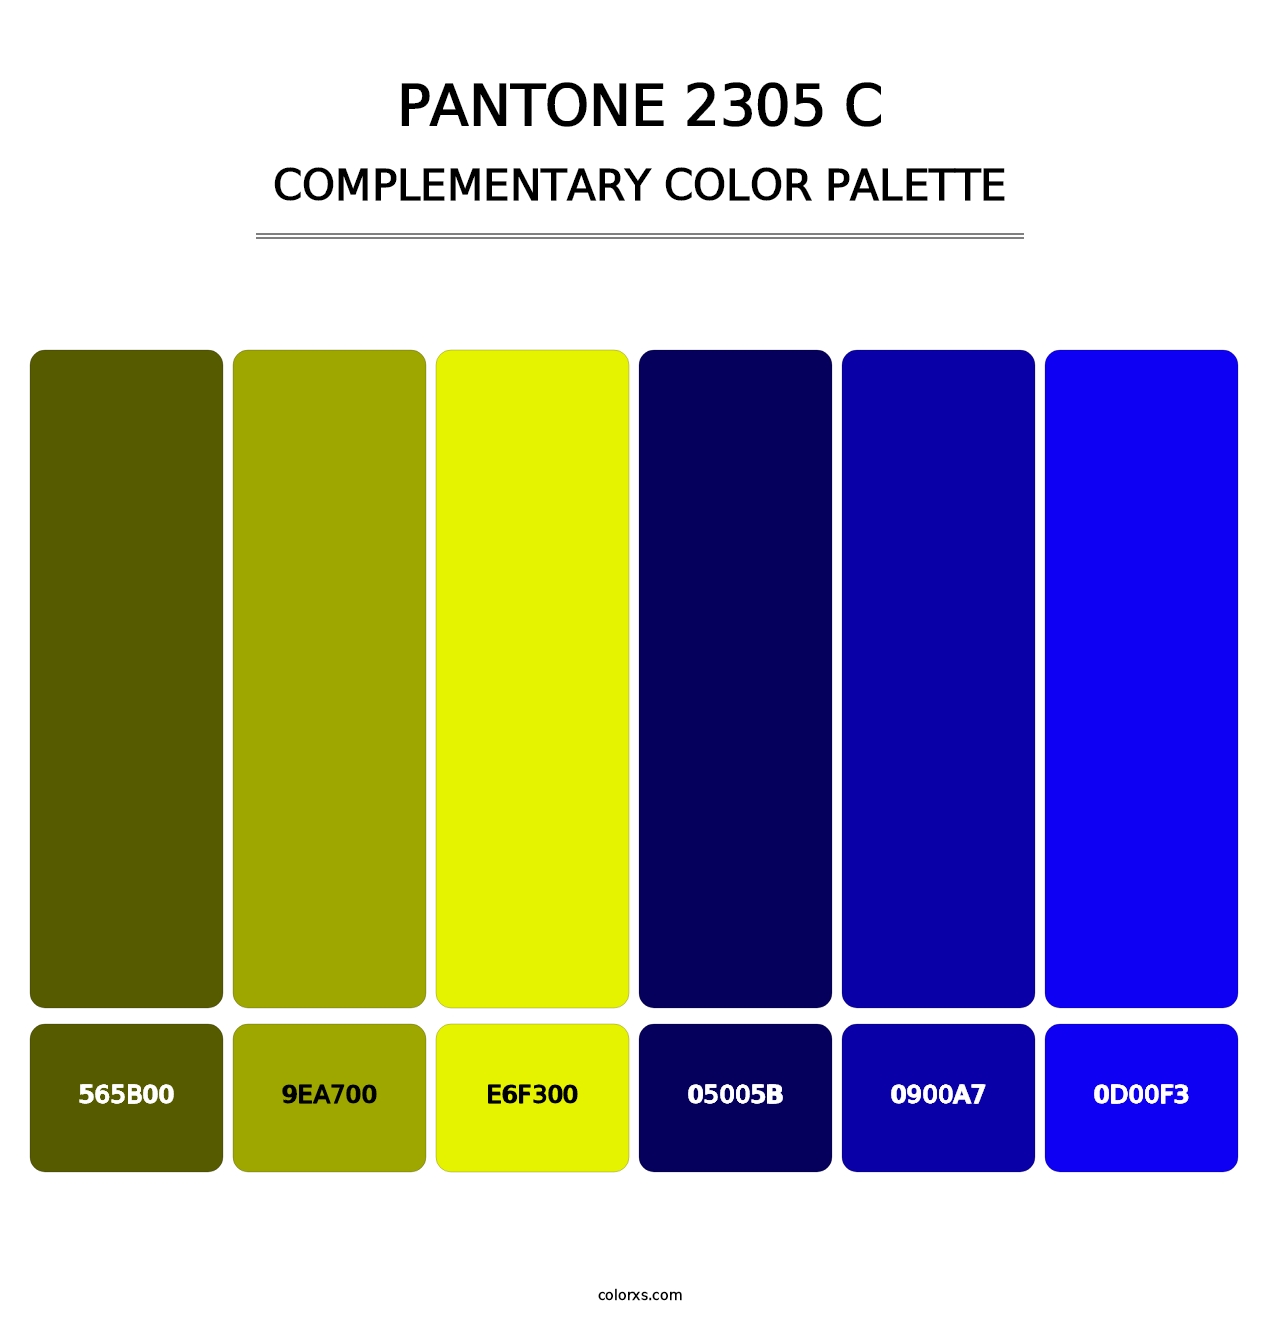 PANTONE 2305 C - Complementary Color Palette